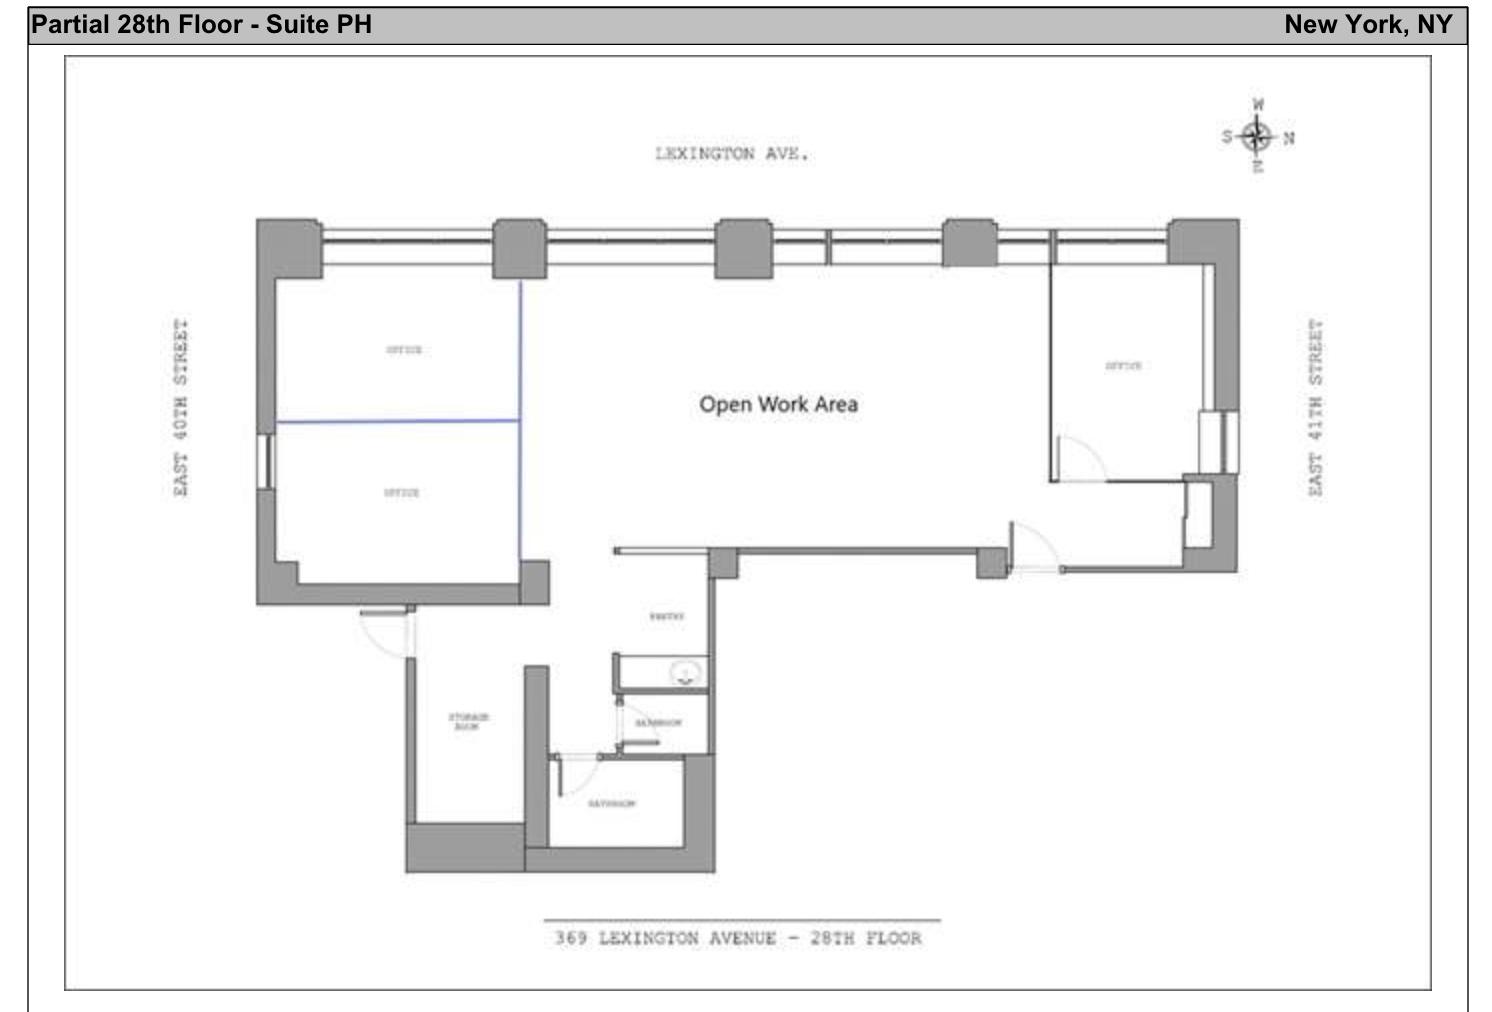 Floor plan of 369 Lexington Avenue medical office space, NYC